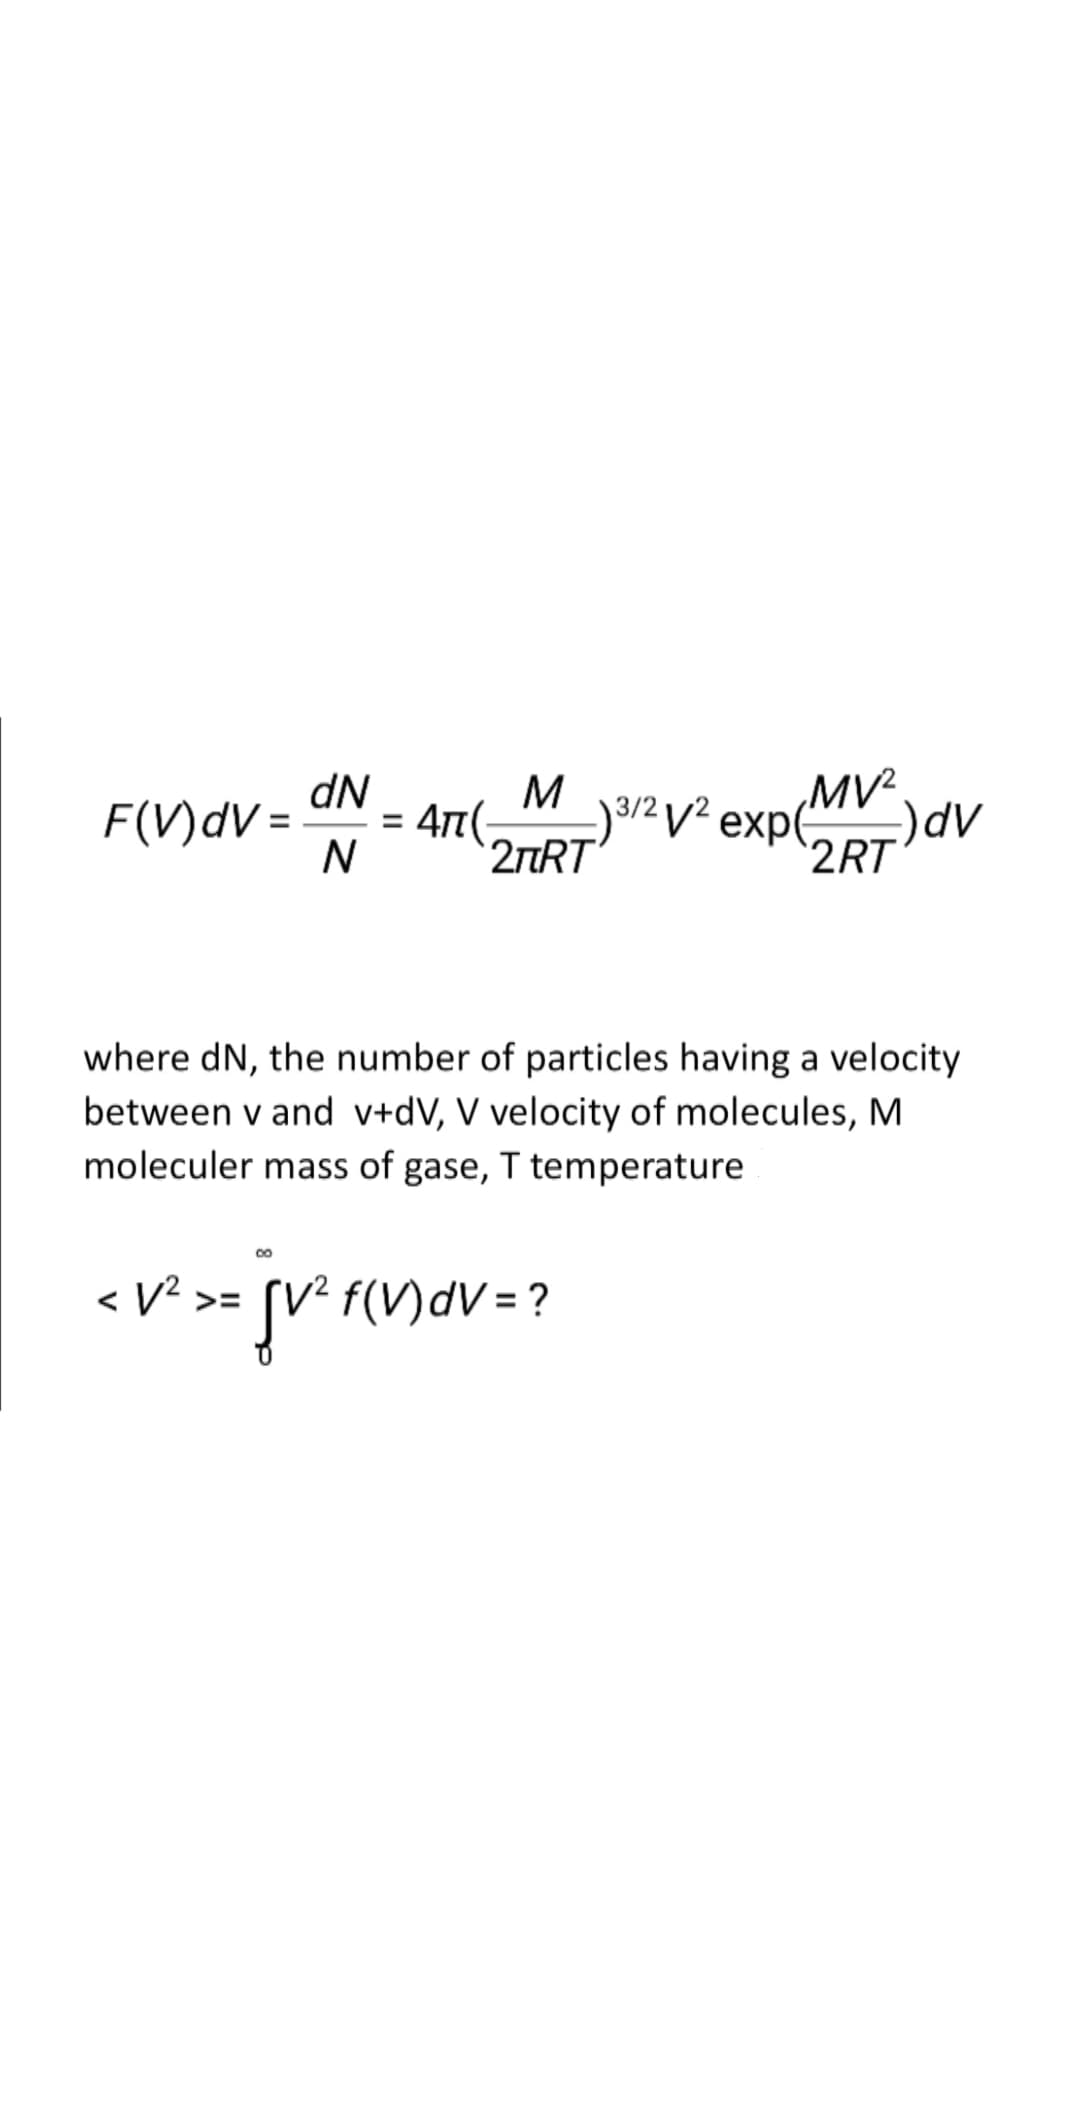 Maz v expe
MV².
2RT
dN
F(V)dV =
= 4t(-
2TRT
AP(-
where dN, the number of particles having a velocity
between v and v+dV, V velocity of molecules, M
moleculer mass of gase, T temperature
< V? >=
sve {()dv= ?
V =
